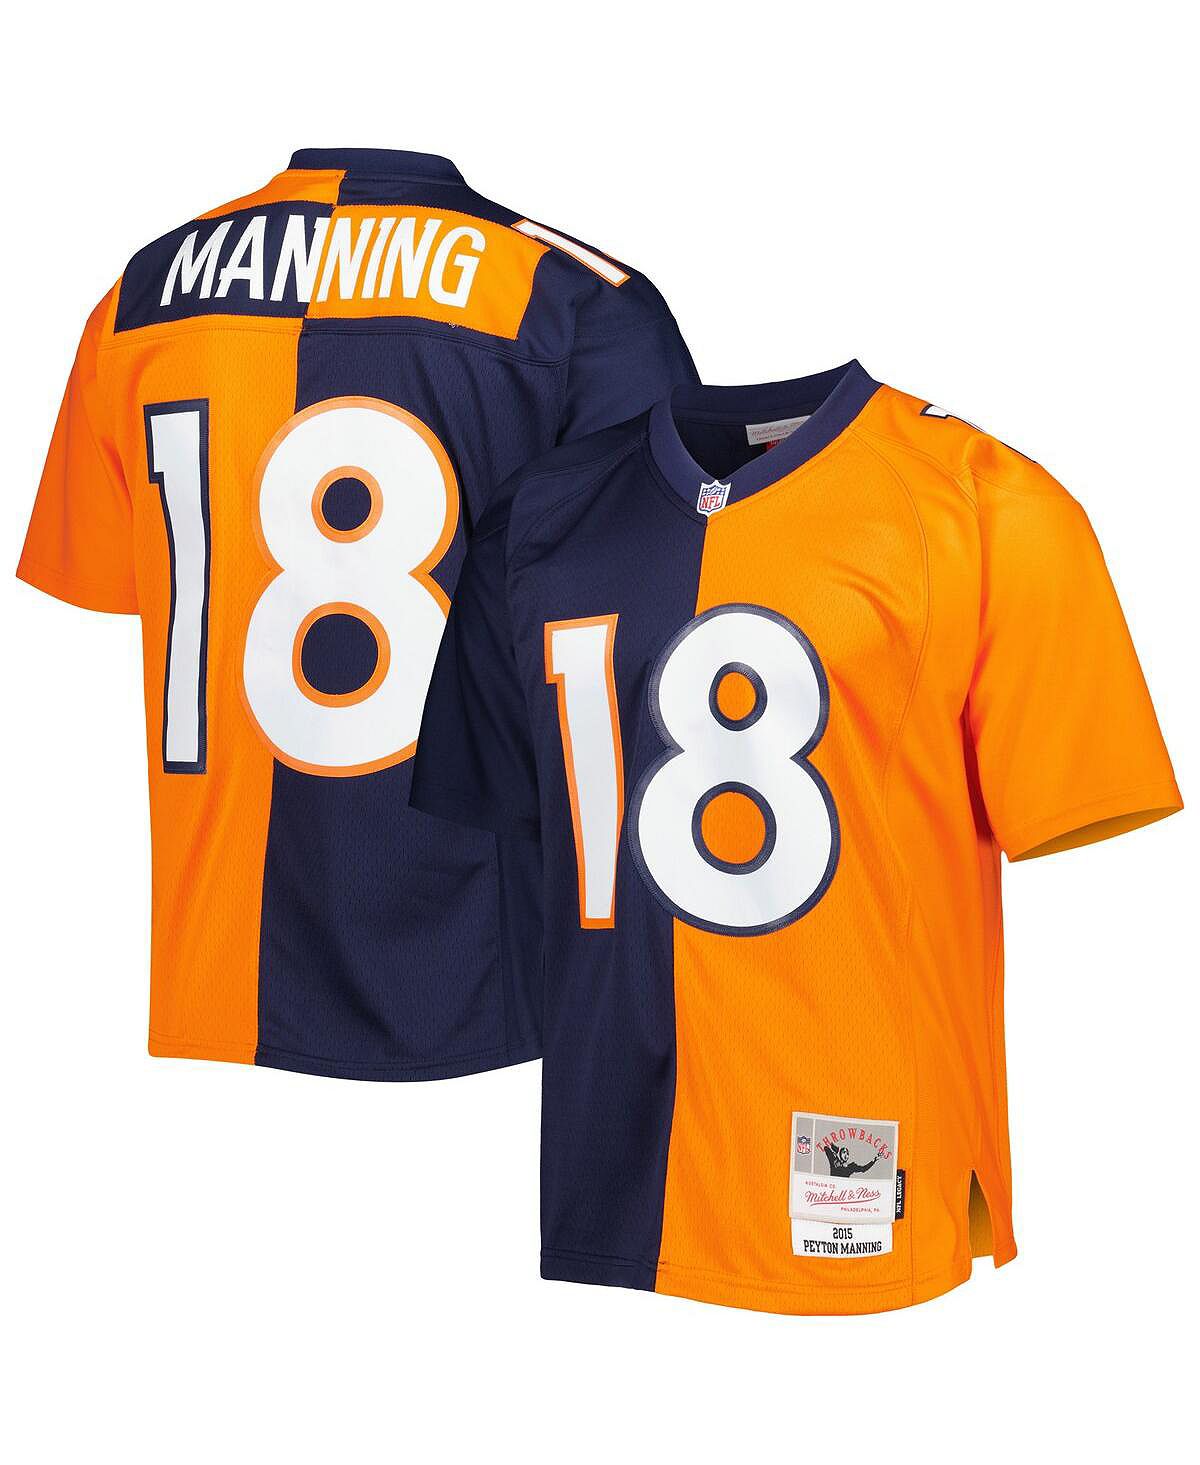 Мужская футболка peyton manning navy, orange denver broncos 2015 split legacy, копия джерси Mitchell & Ness, мульти